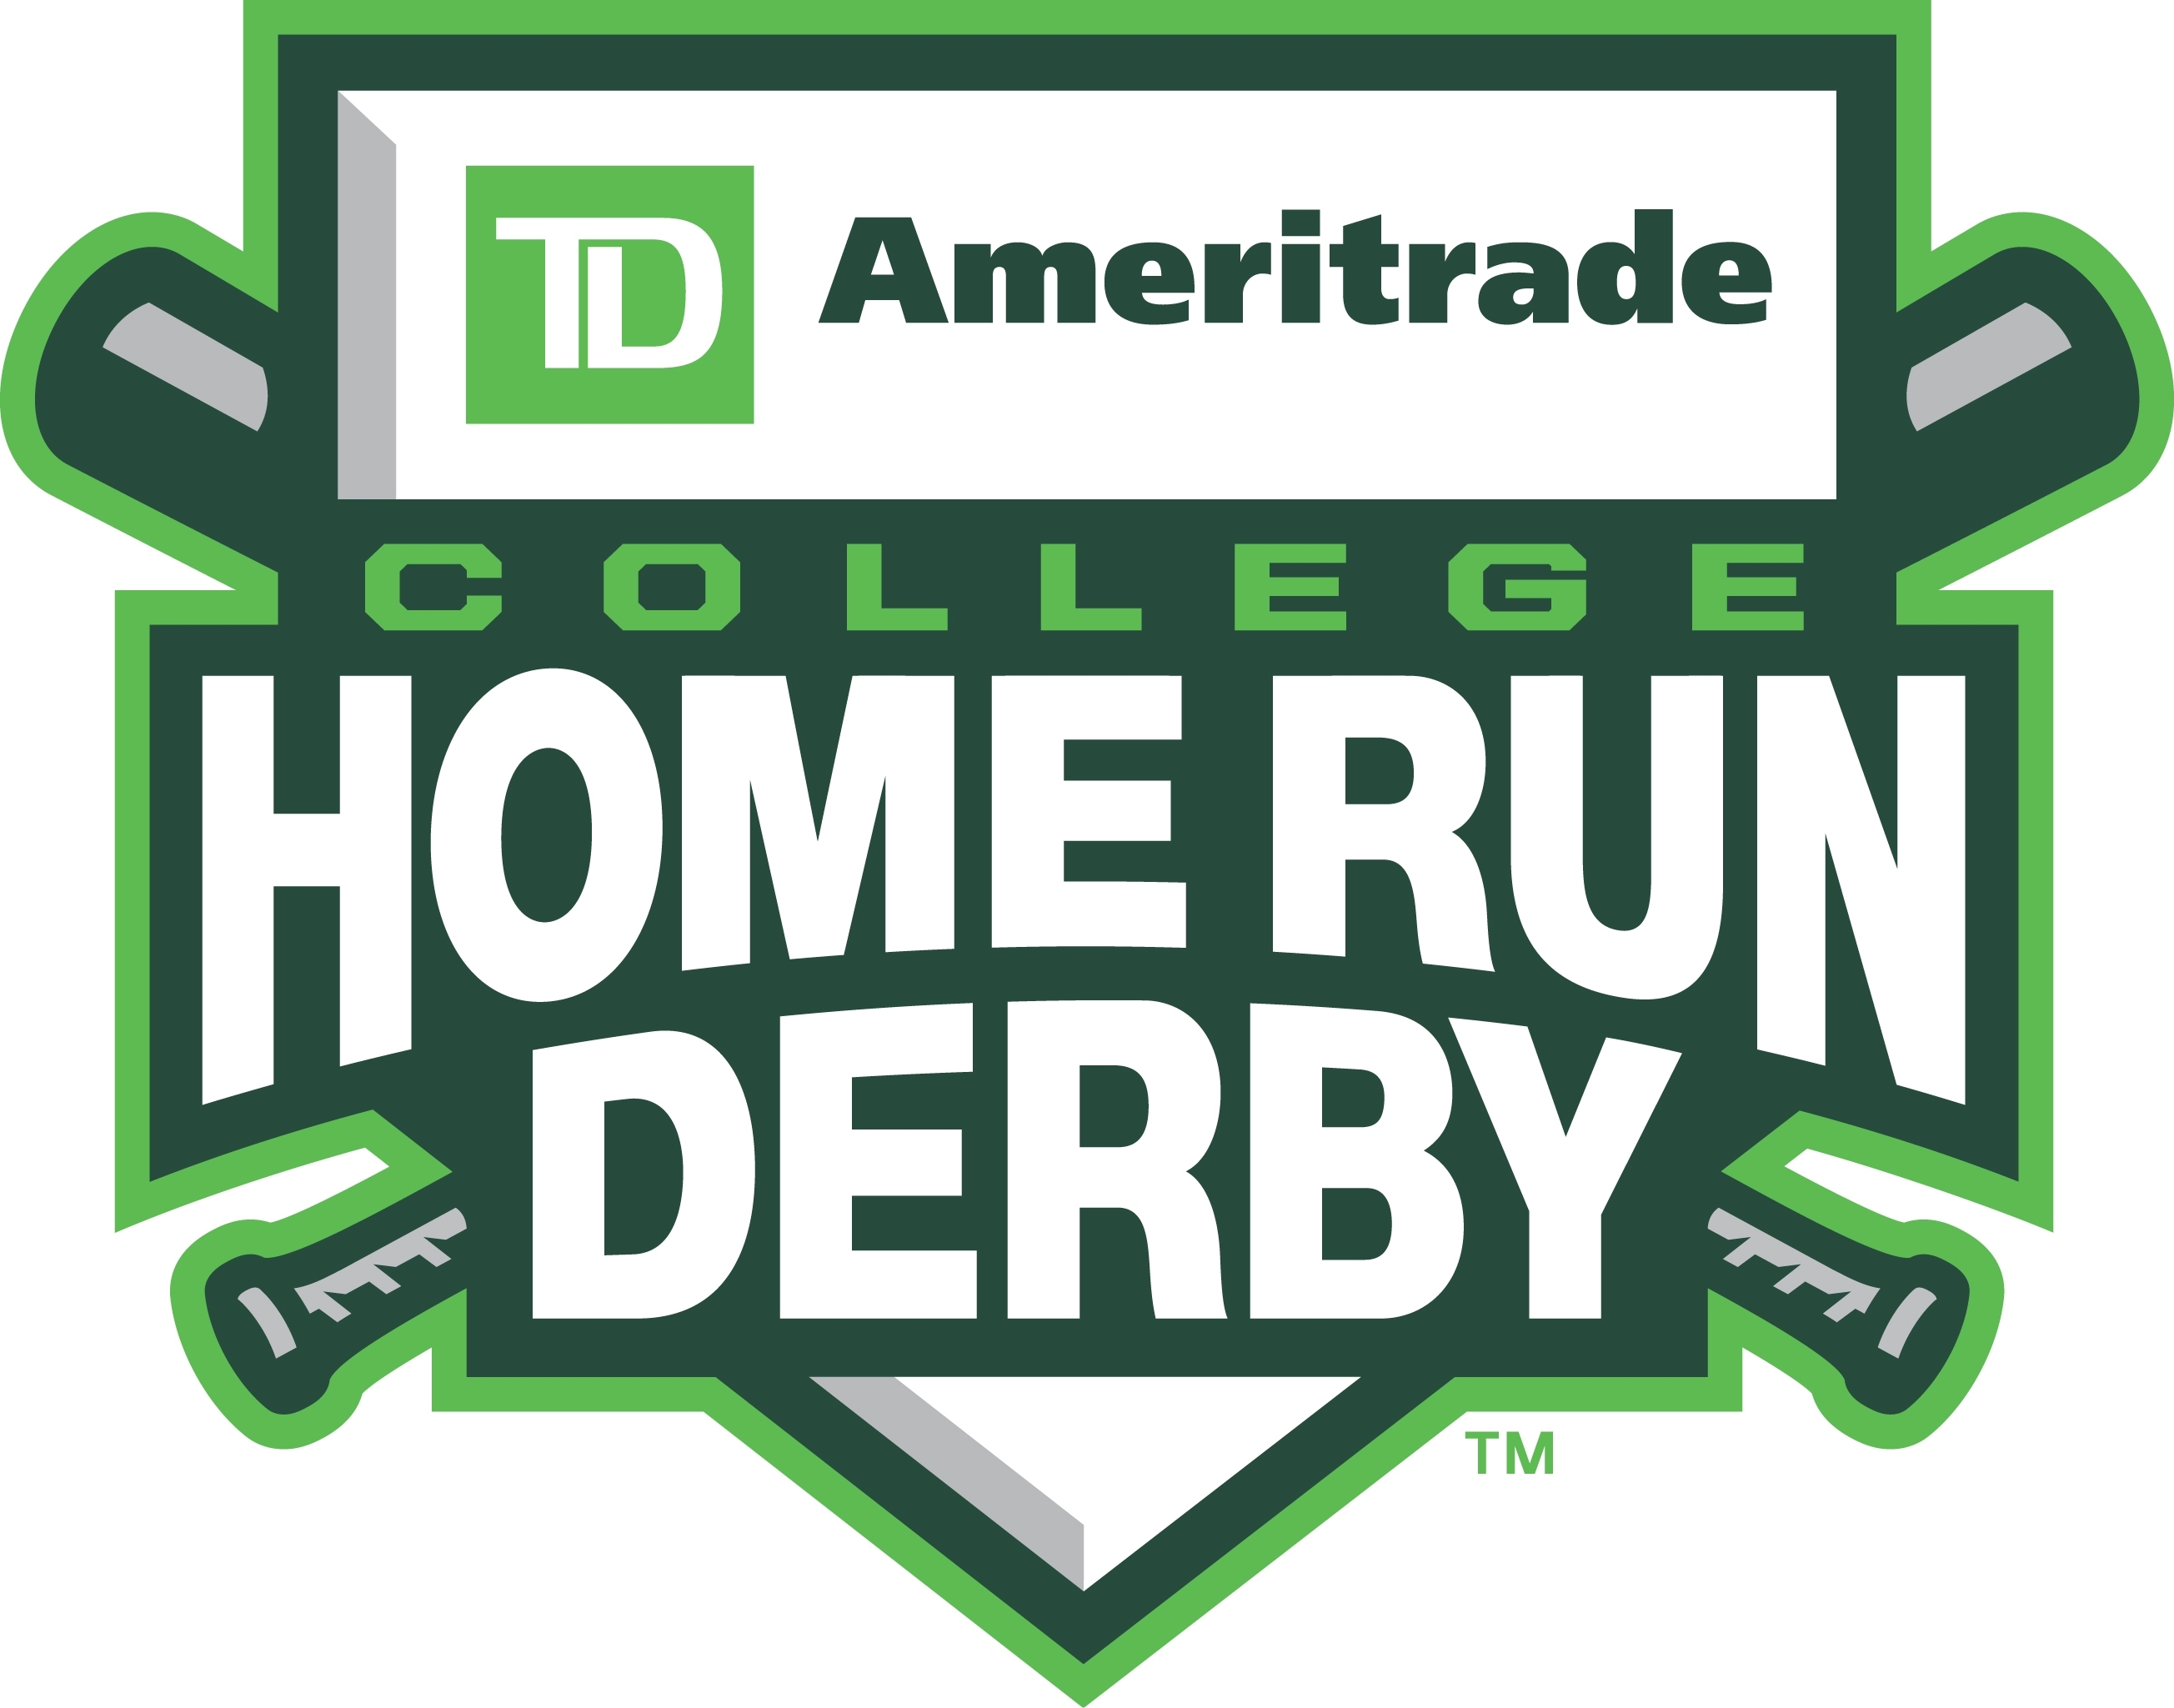 LB Dantzler To Compete In 2012 TD Ameritrade College Home Run Derby